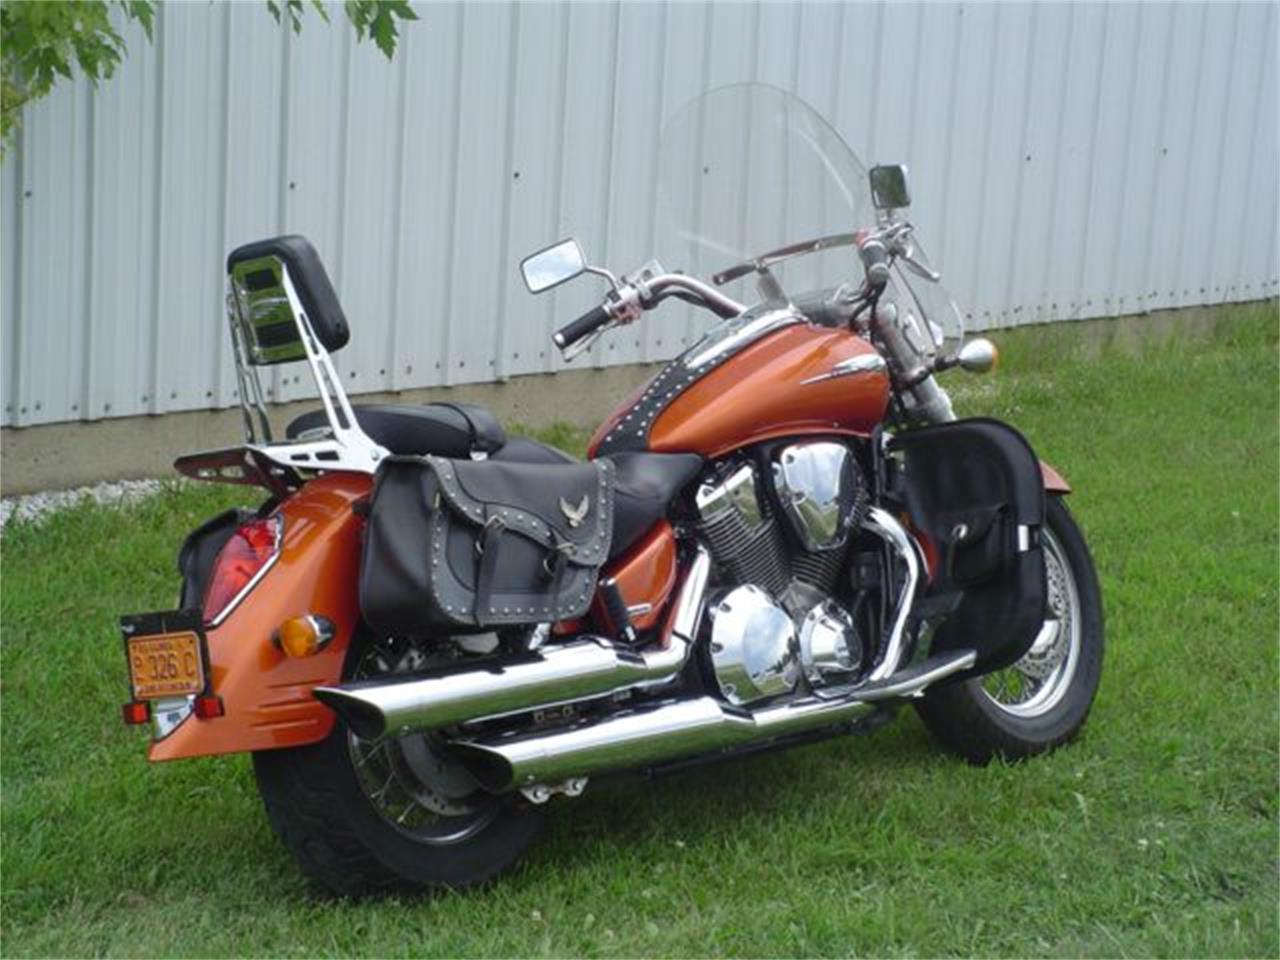 2002 Honda Motorcycle for Sale | ClassicCars.com | CC-1010856